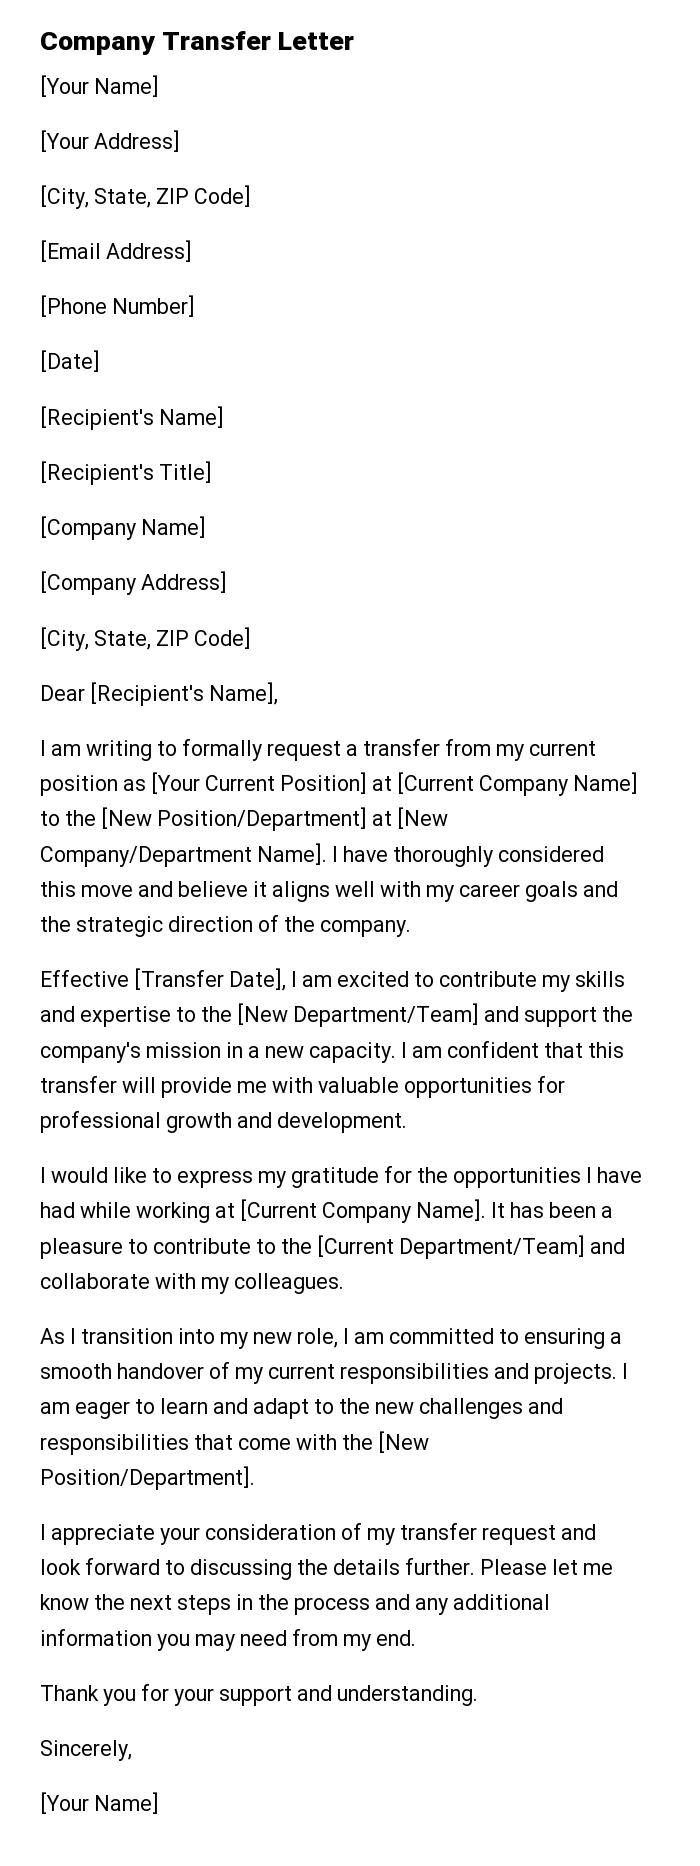 Company Transfer Letter